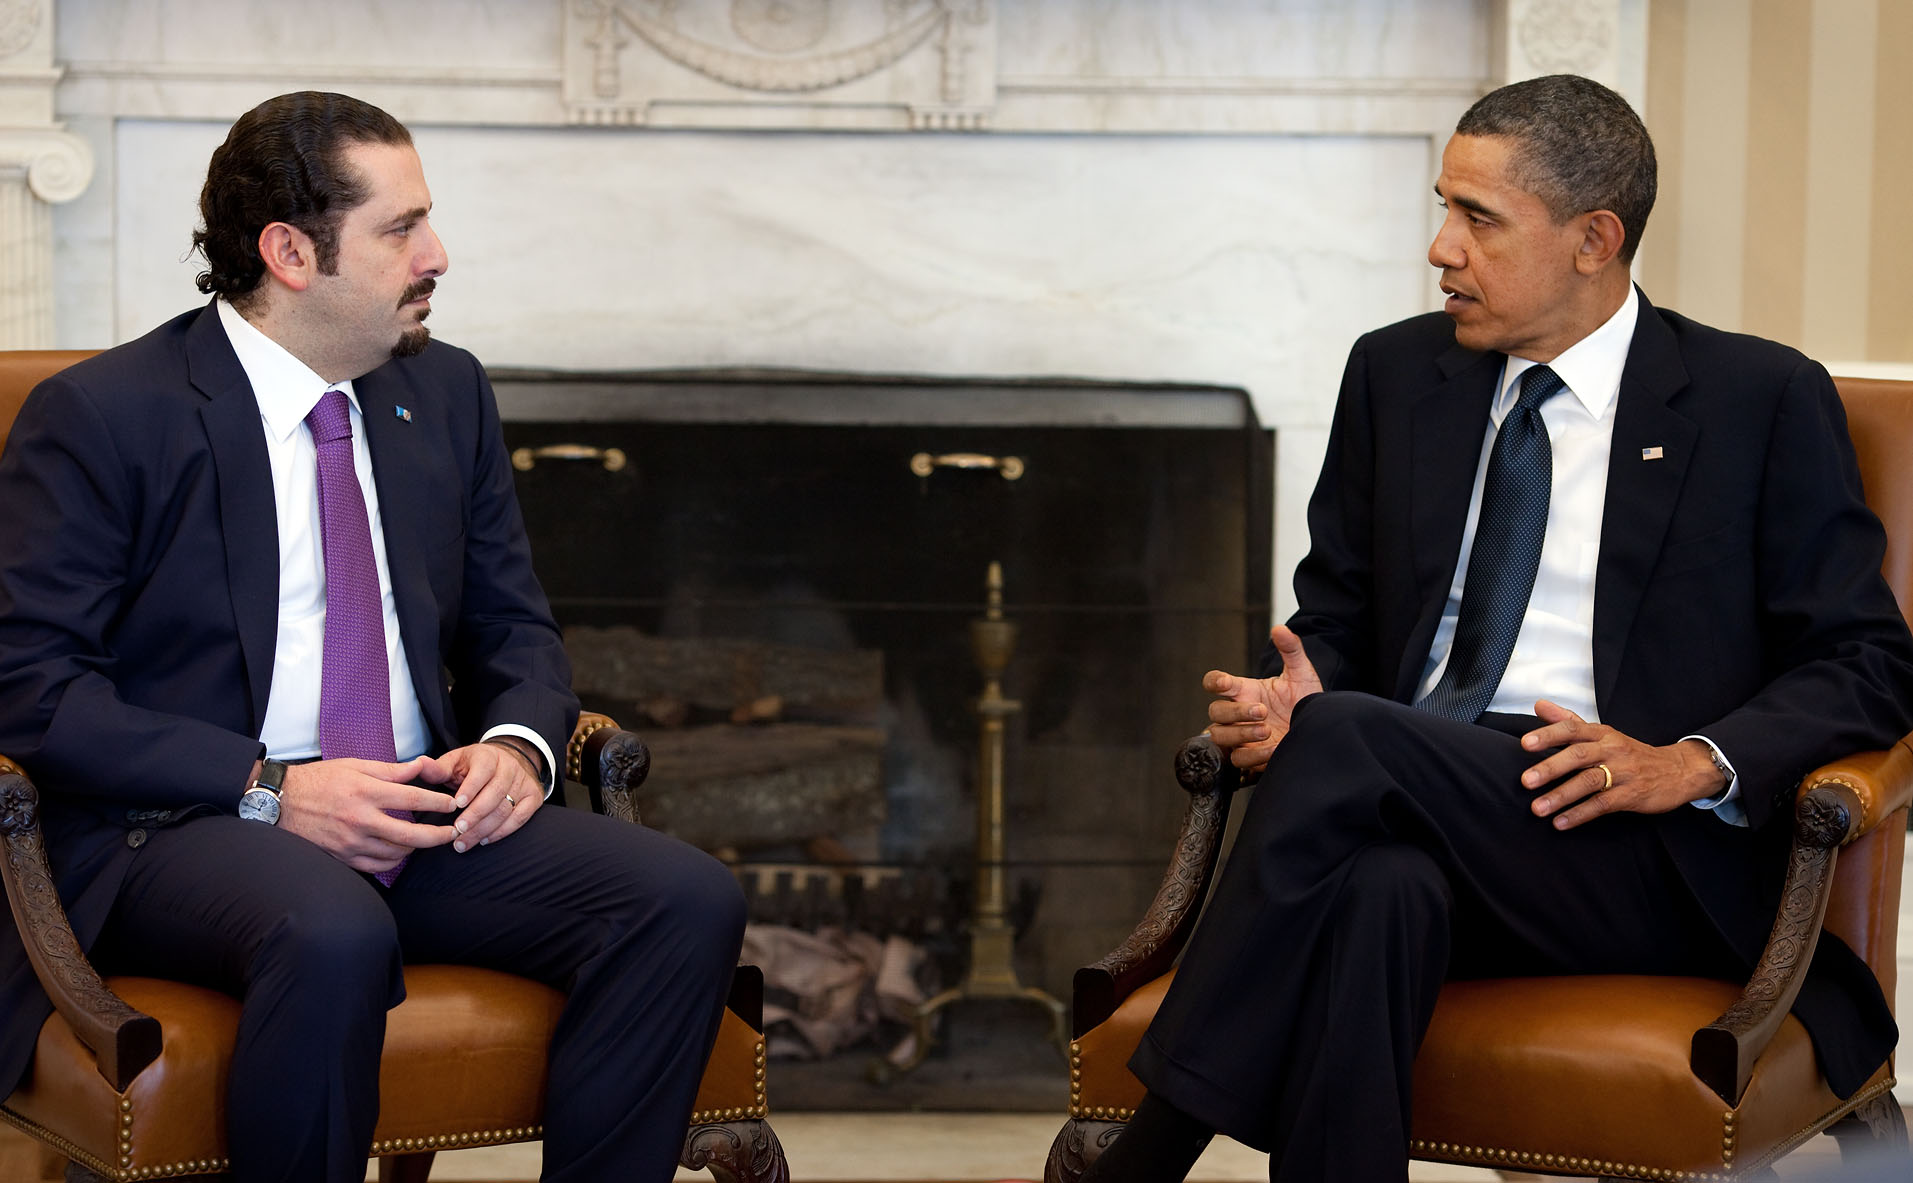 President Obama Meets with Prime Minister Hariri of Lebanon